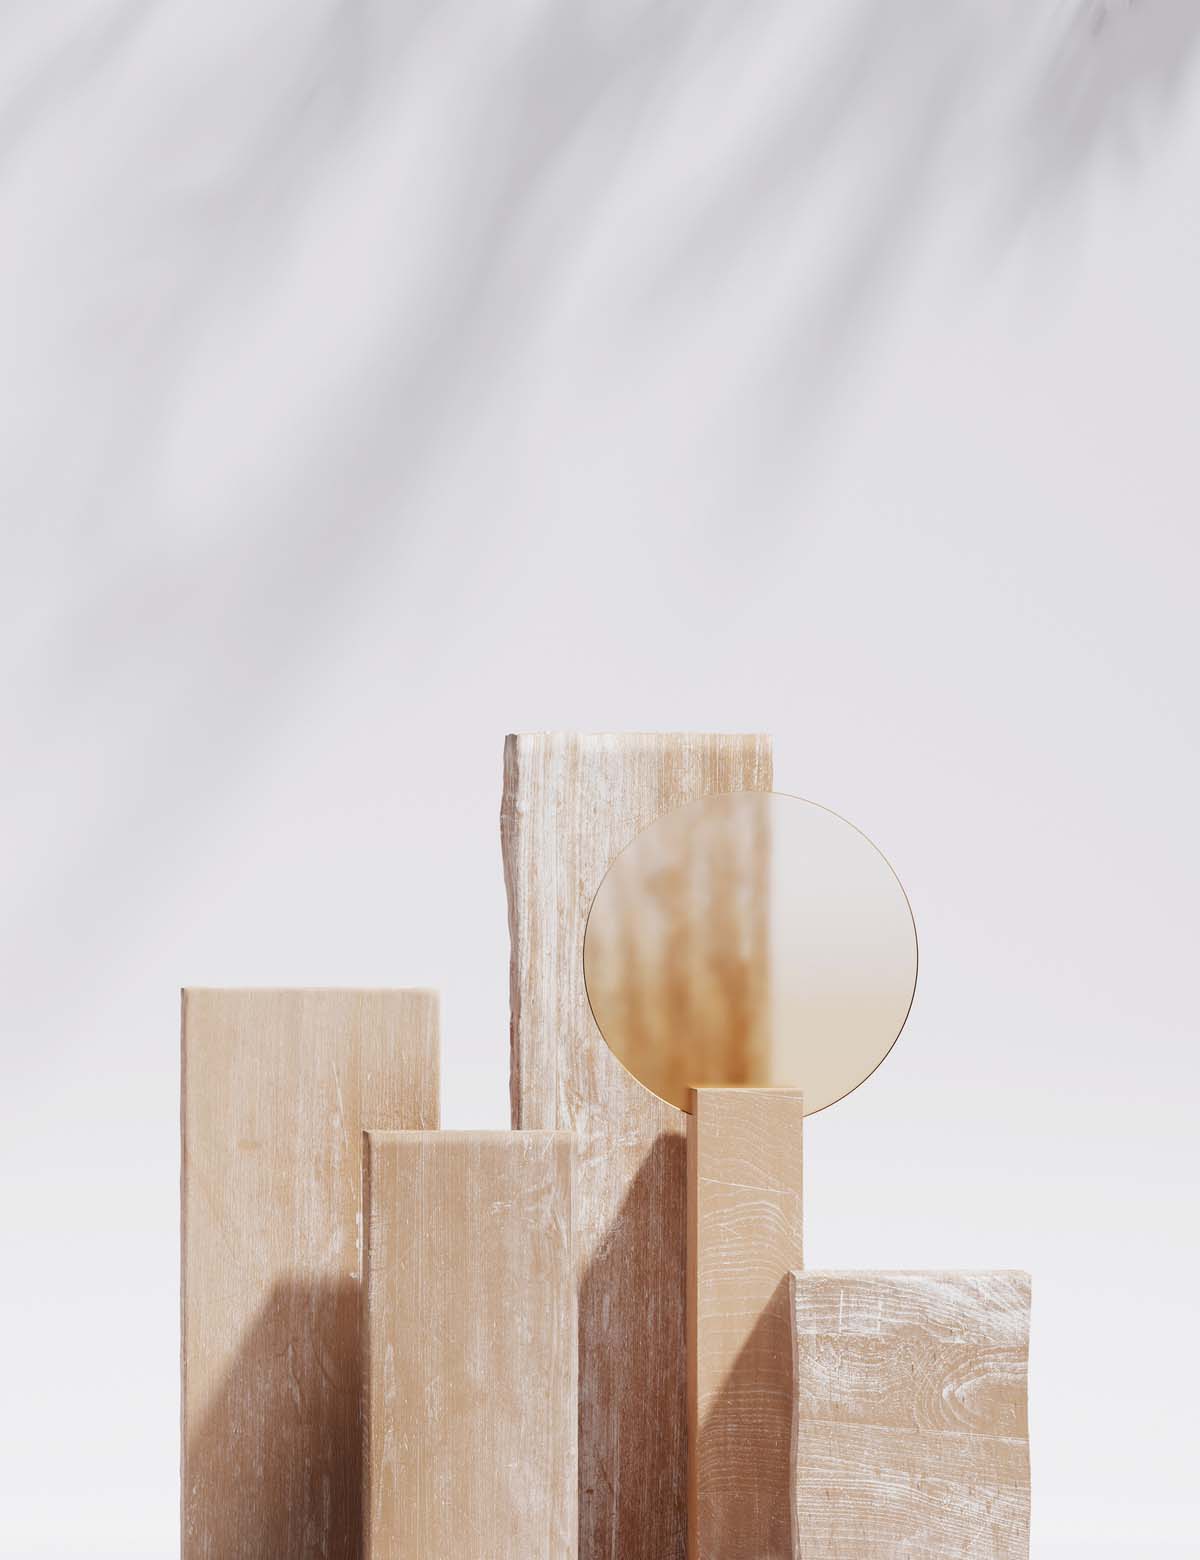 Wooden Blocks Poster - KAQTU Design